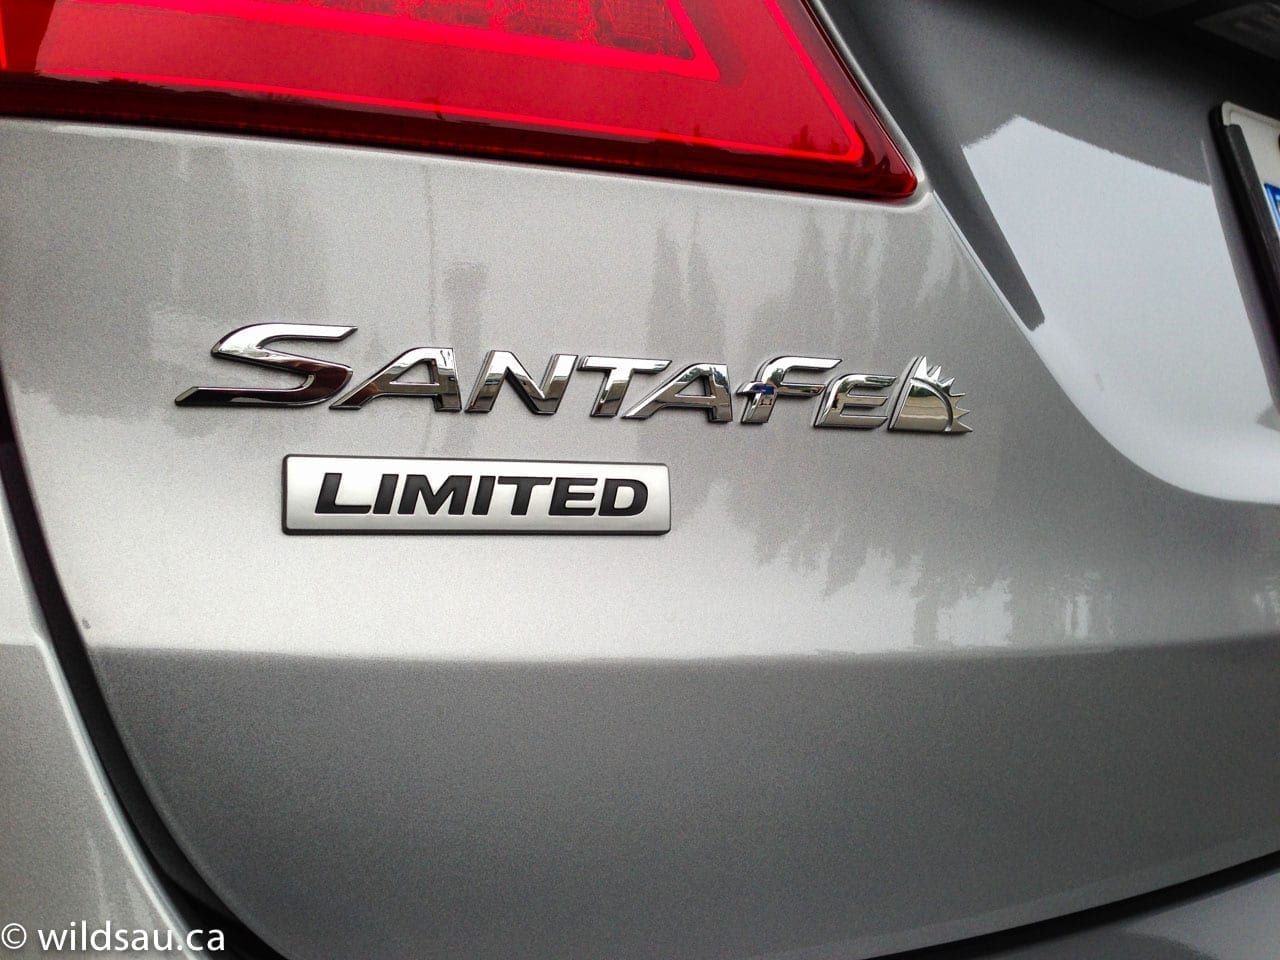 Santa Fe XL Limited badge